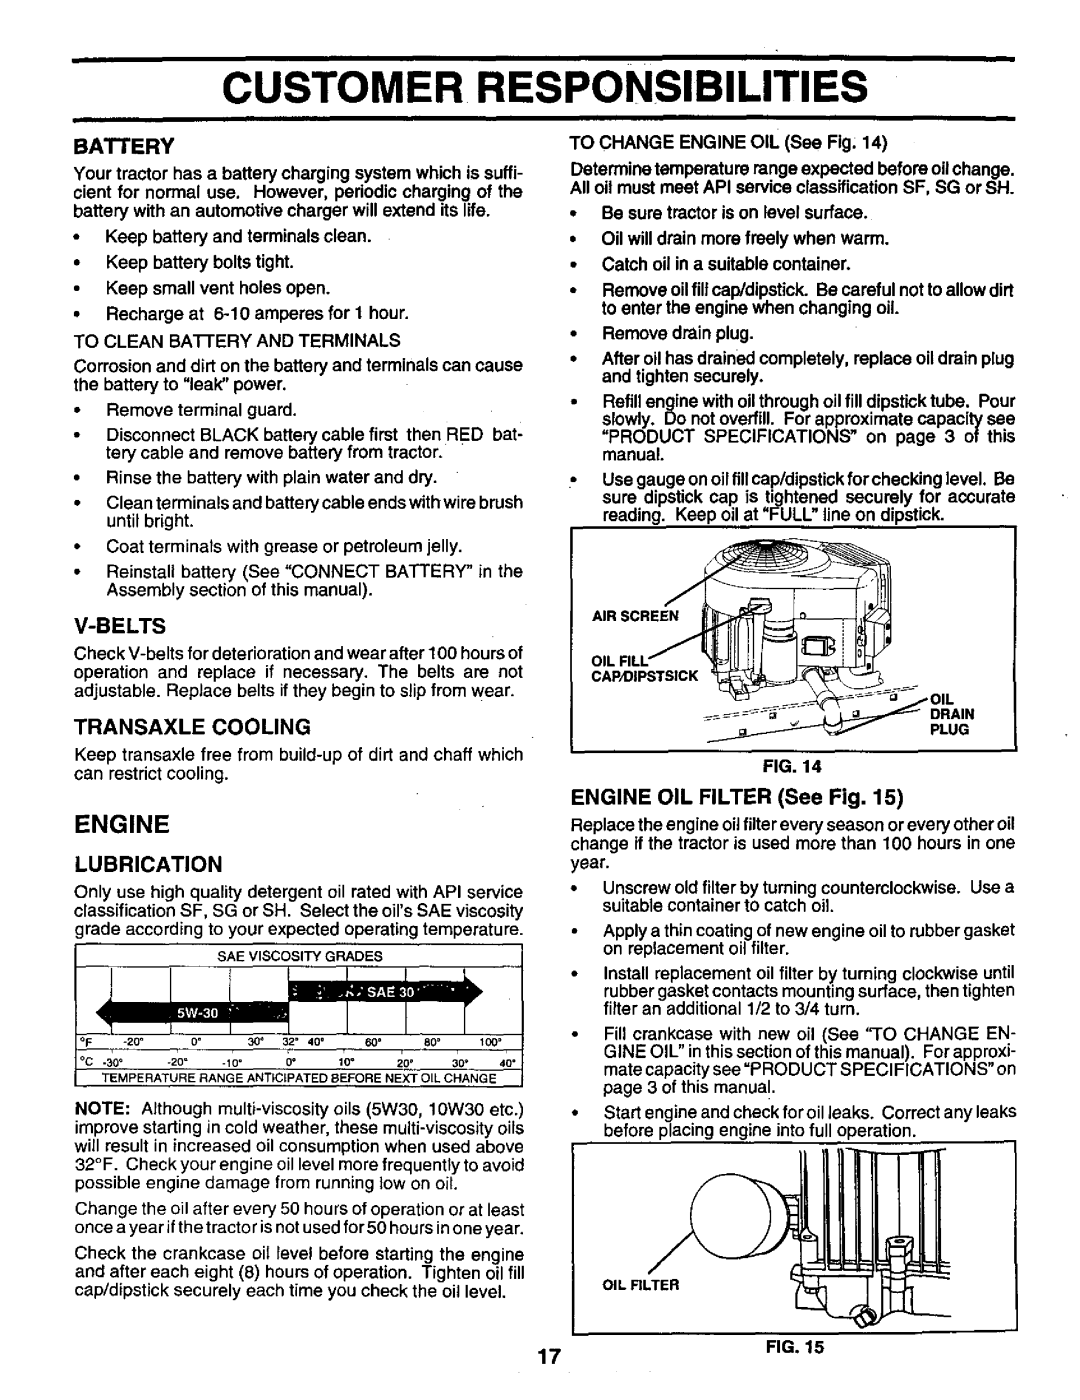 Craftsman 917.259561 owner manual Engine, ENGINE OIL FILTER See Fig, Customer Responsibilities 